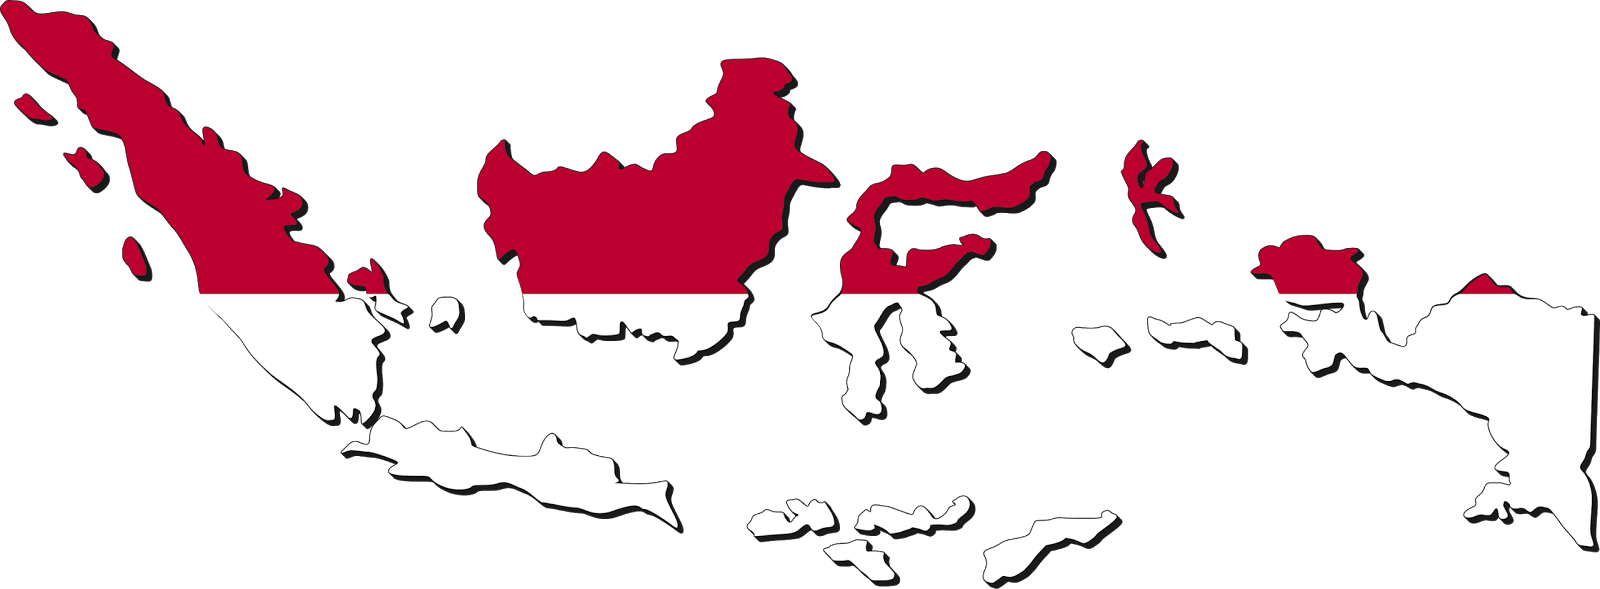  gambar  Gambar  Peta Indonesia  Lengkap